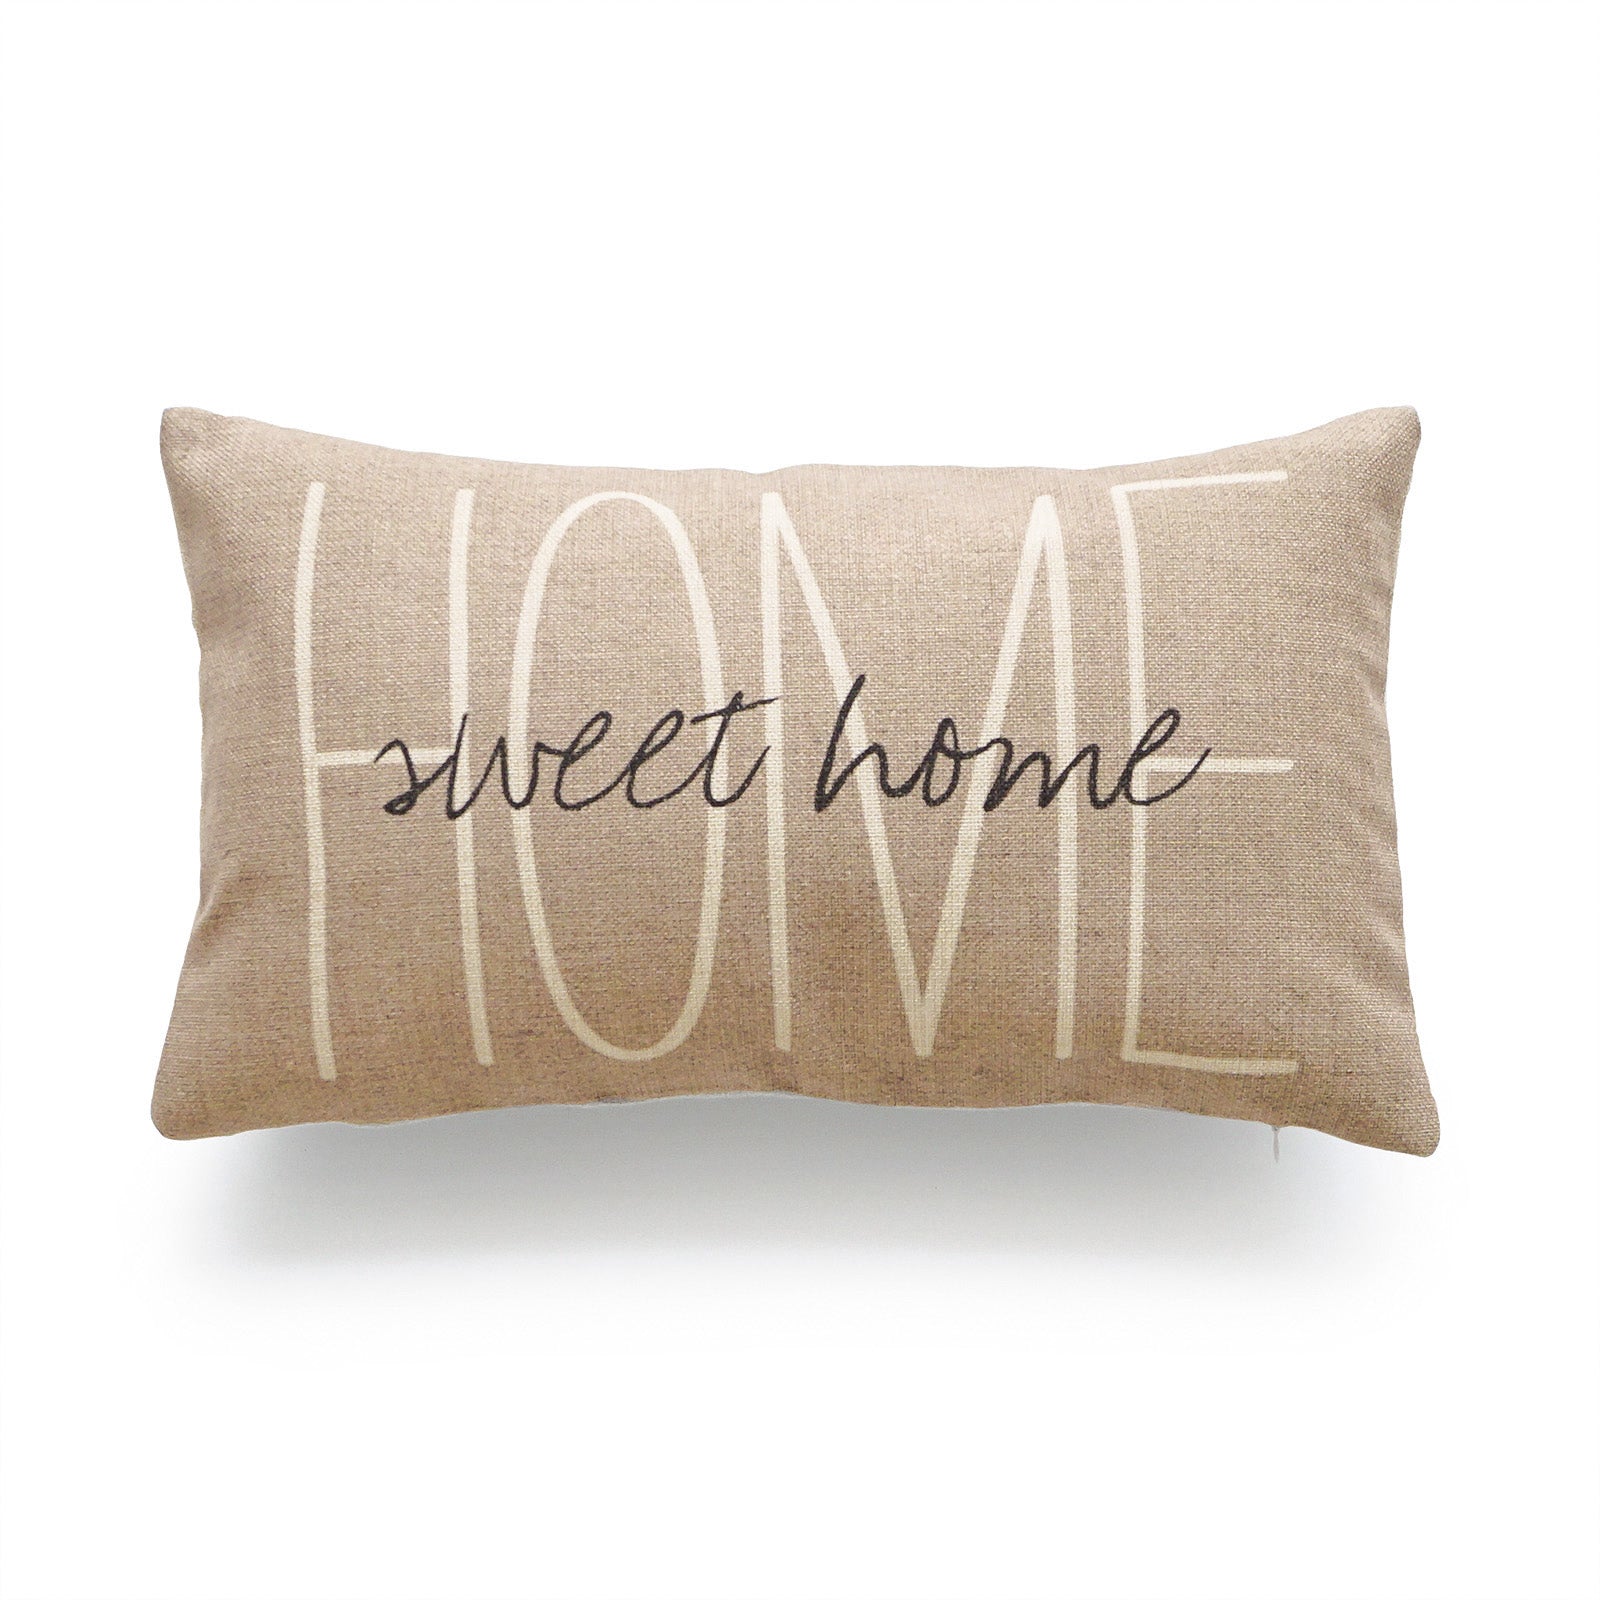 Rustic Home Sweet Home Lumbar Pillow Cover, Tan, 12"x20"